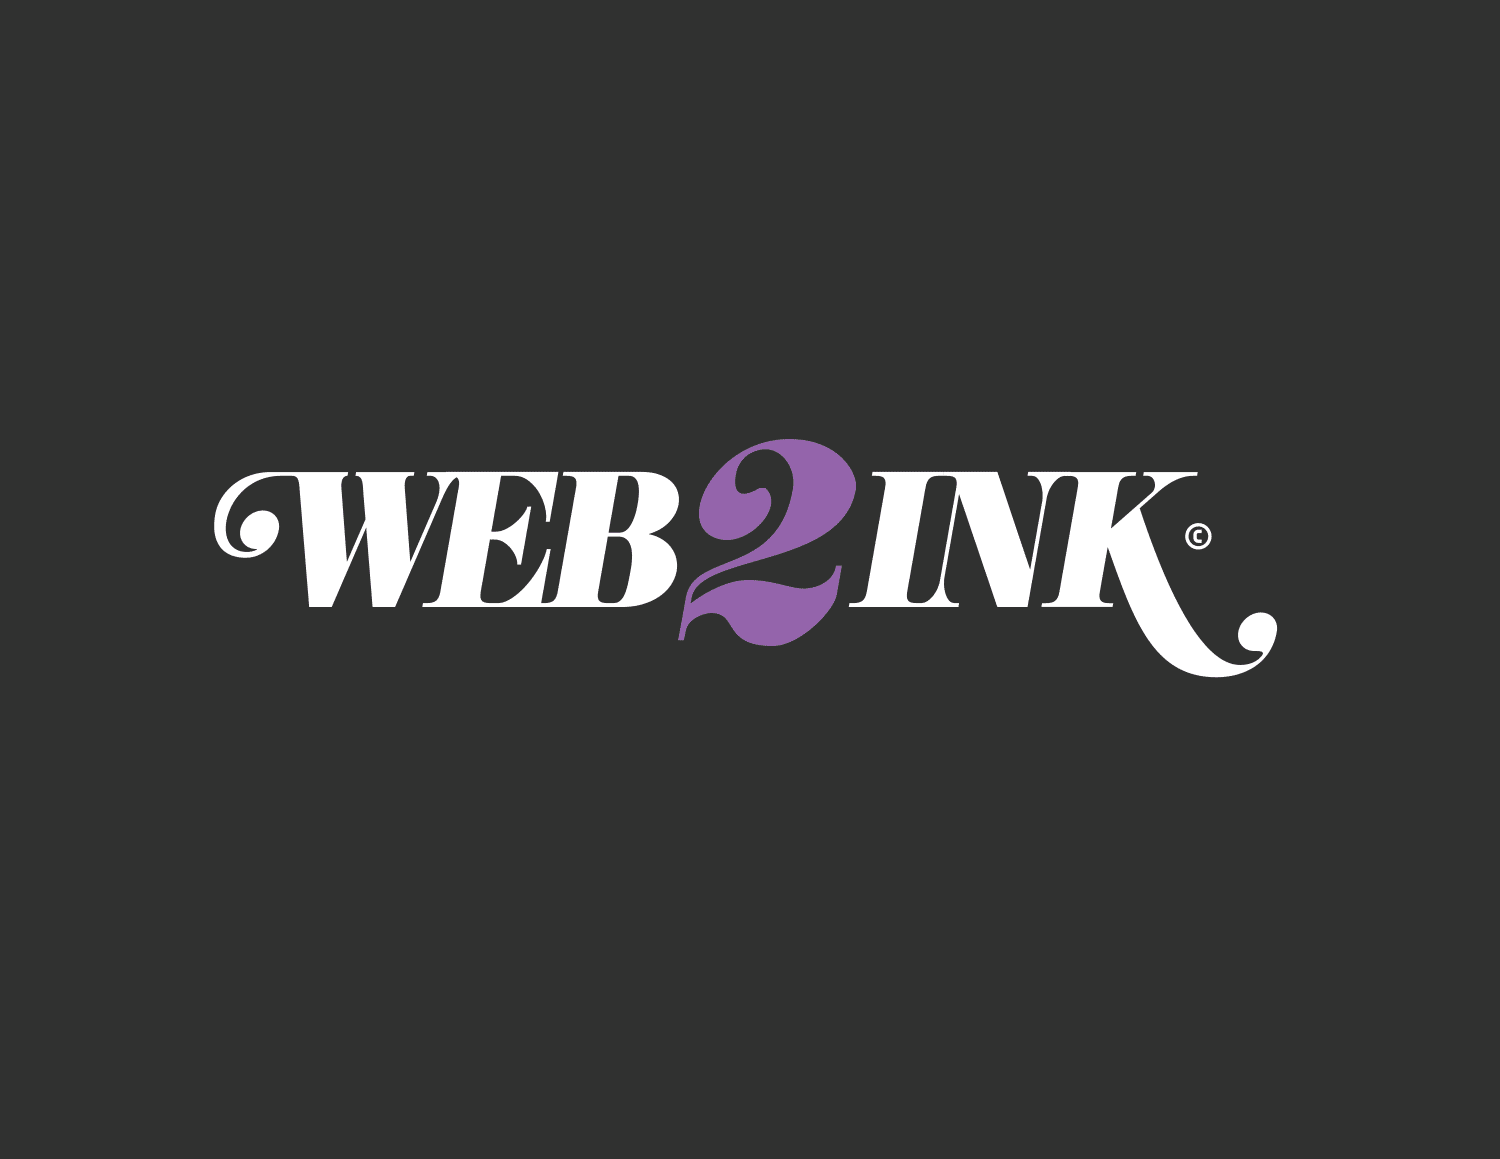 web2ink secondary logo on a dark grey background